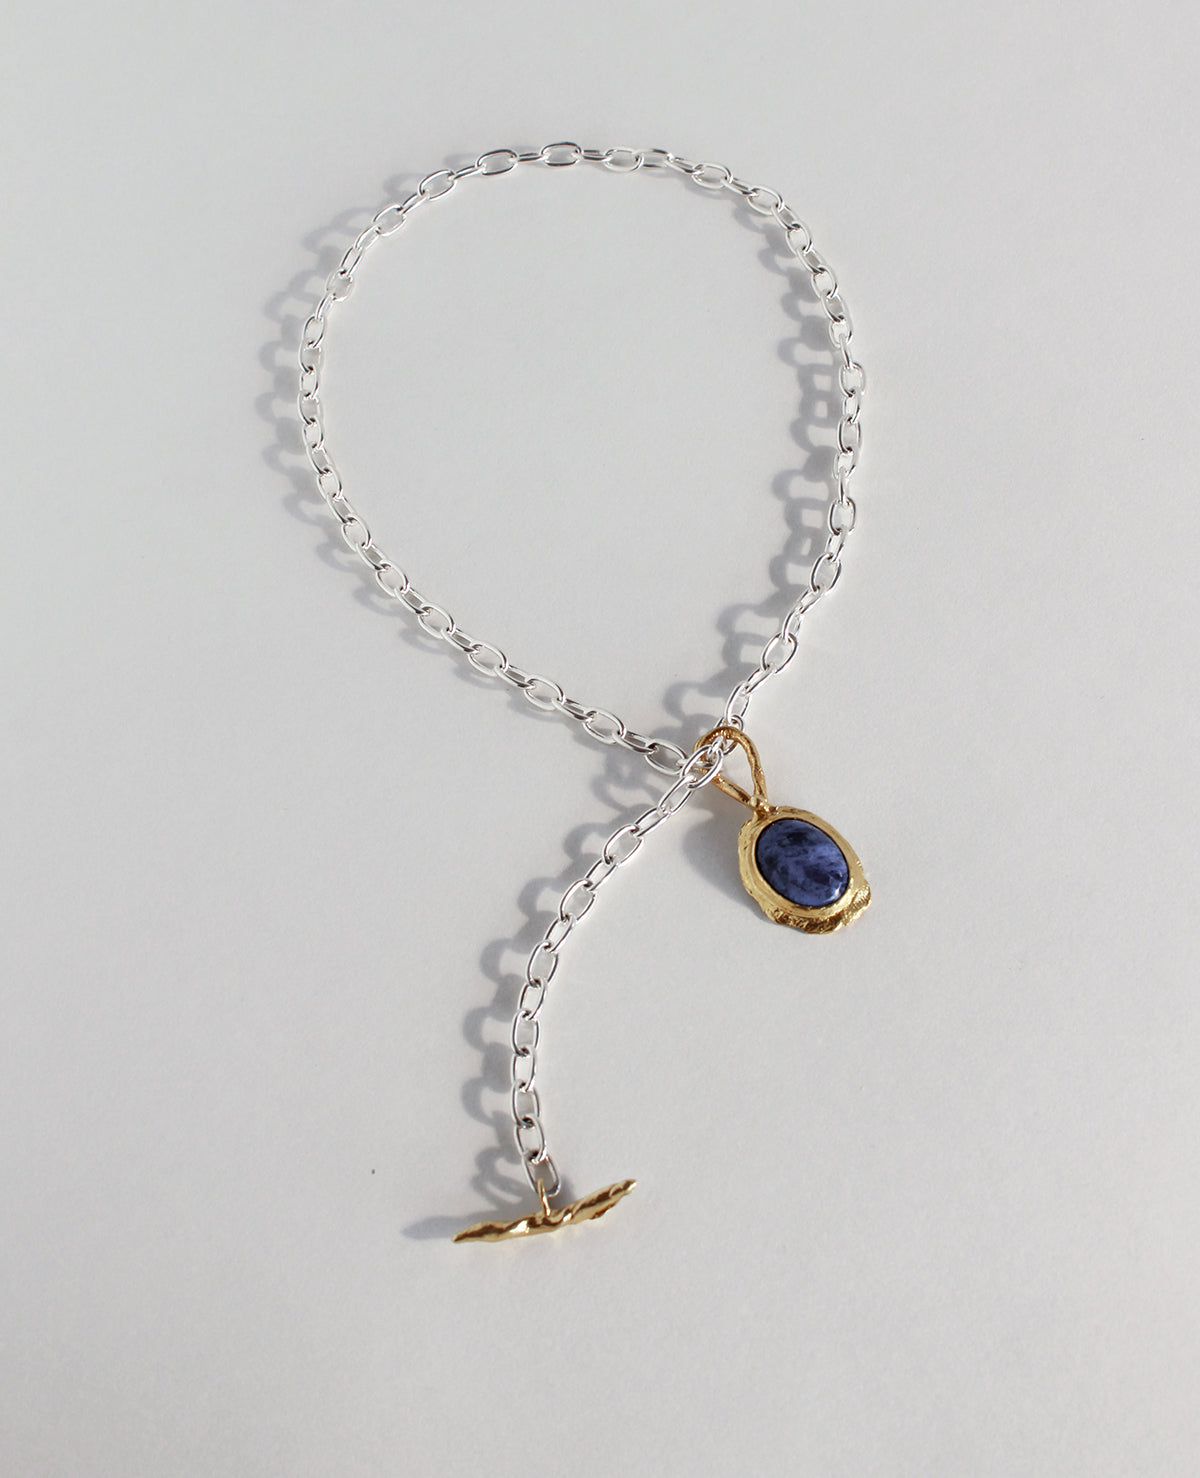 EYE OF TAURI // necklace - ORA-C jewelry - handmade jewelry by Montreal based independent designer Caroline Pham